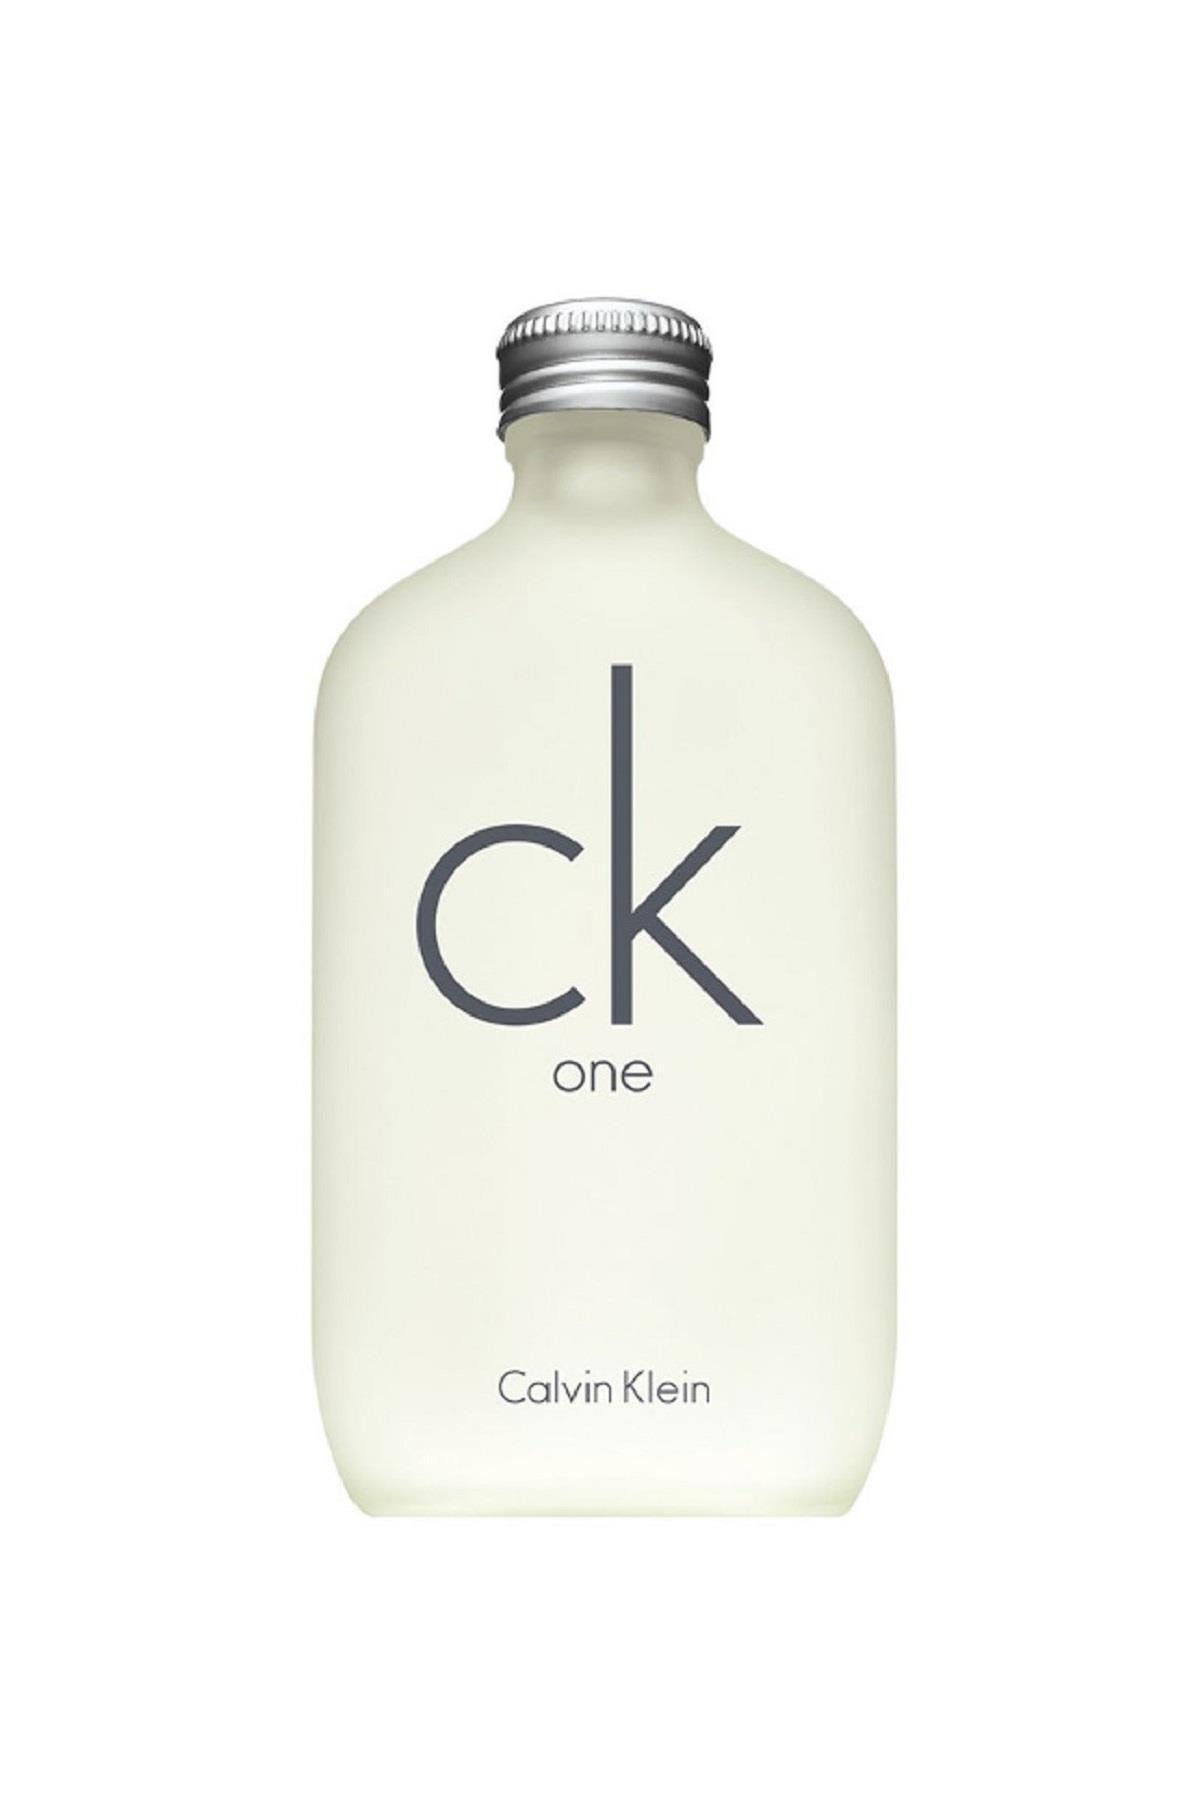 Calvin Klein One Edt 200 ml یونیسکس Perfume 8699490221419